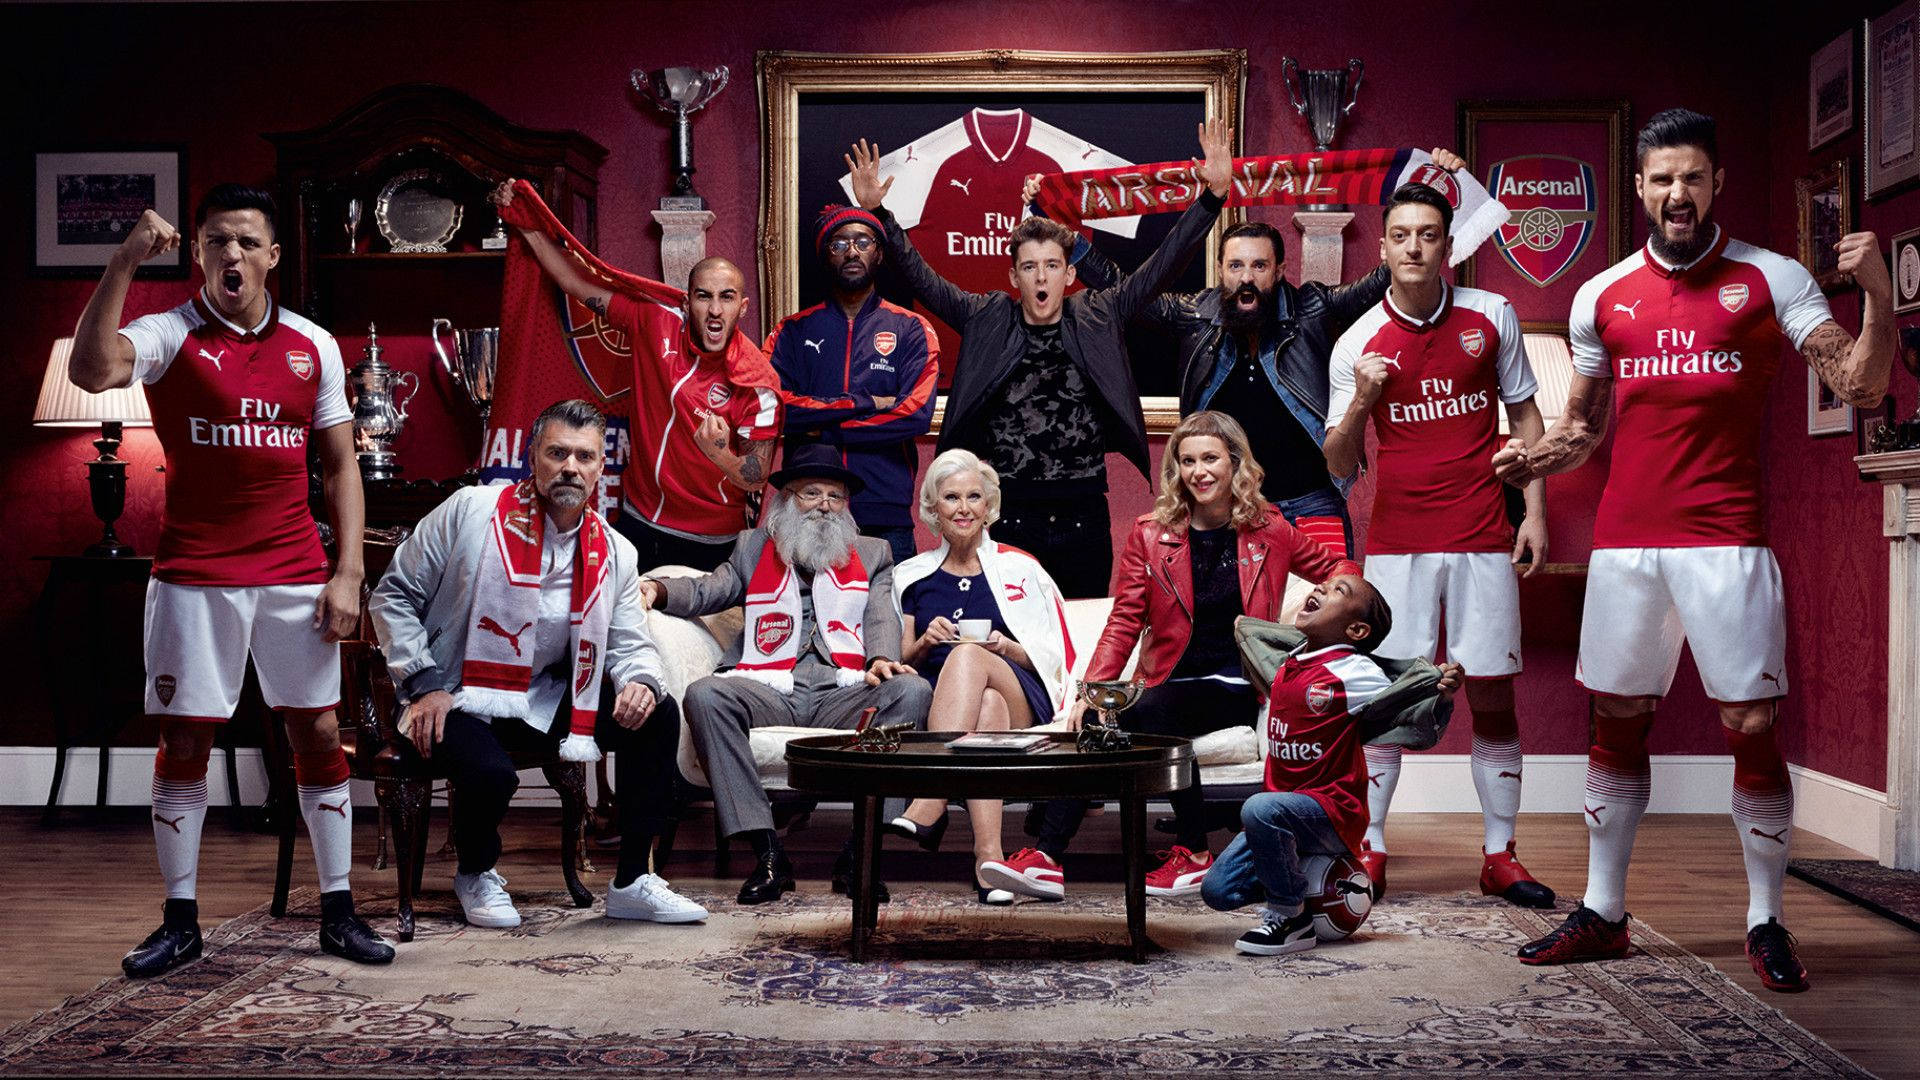 Arsenal Fc Background Wallpaper